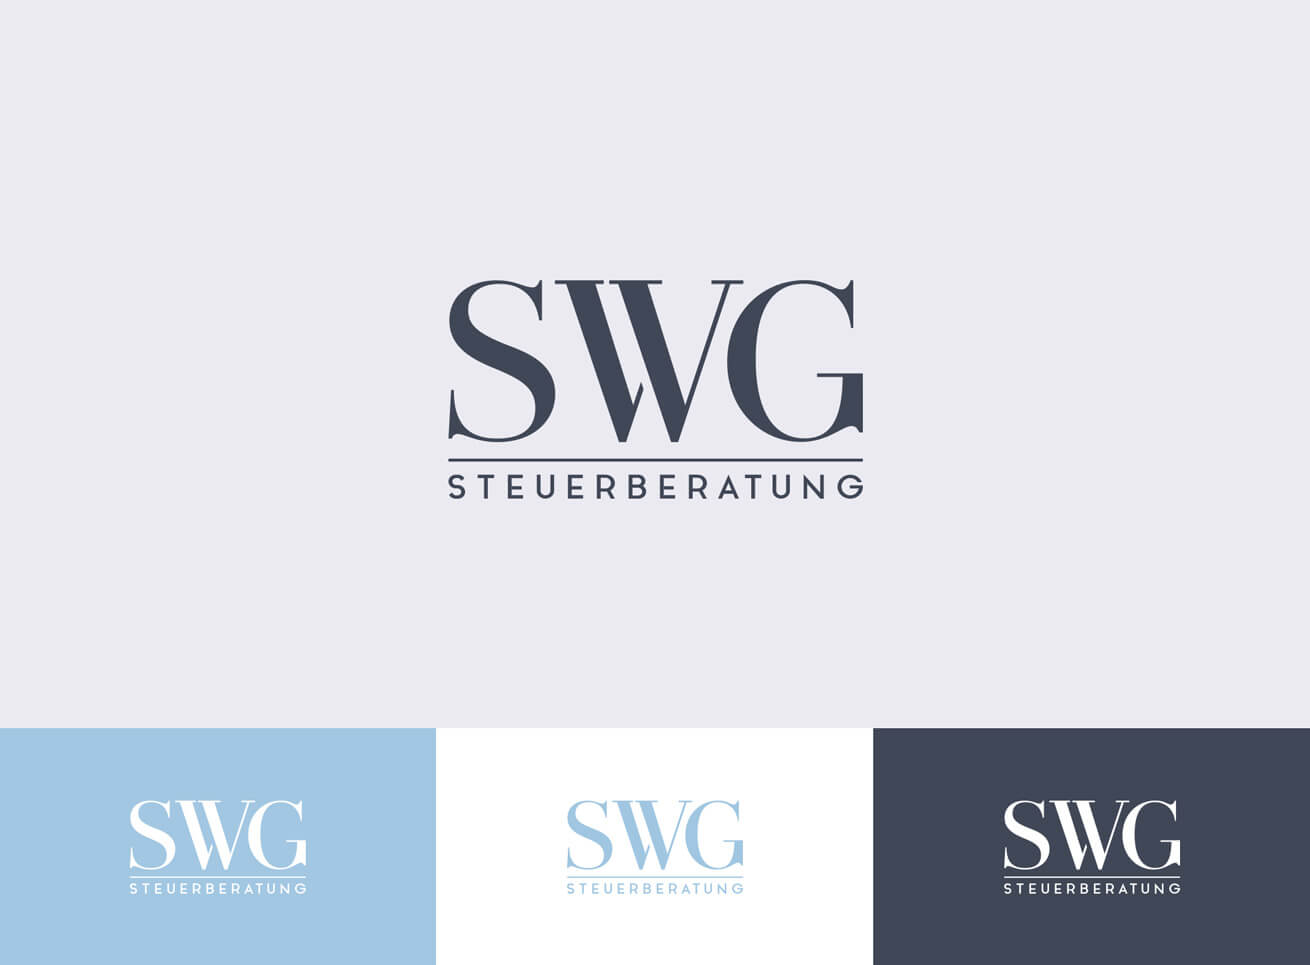 SWG Steuerberatung Logo Grafikdesign